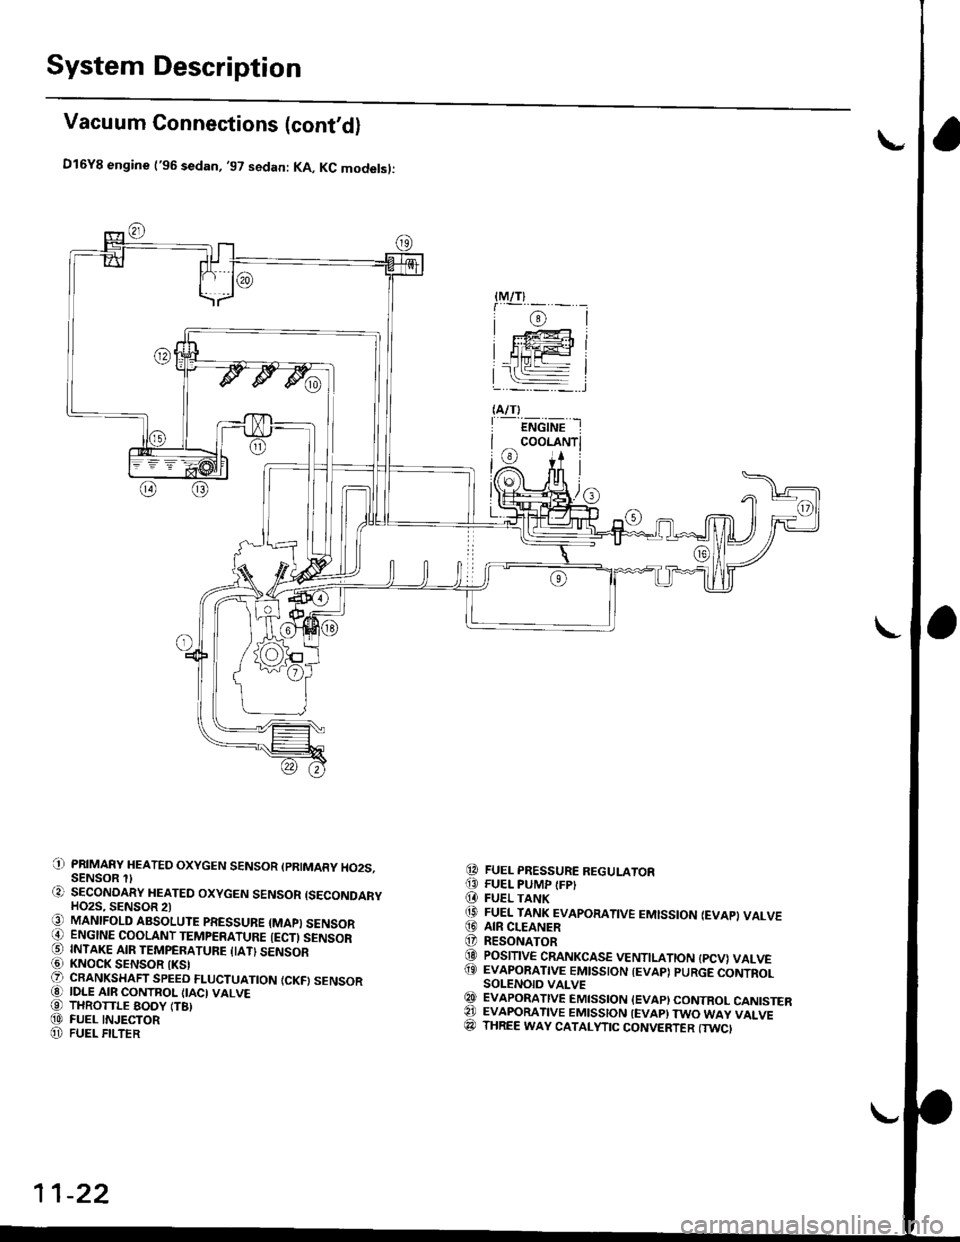 HONDA CIVIC 1999 6.G Owners Manual System Description
Vacuum Connections (contd)
D16Y8 engine (96 sedan, 97 sedan: KA, KC modelsl:
PRIMARY HEATED OXYGEN SENSOR (PRIMARY HO2S.SENSOR  SECONOARY HEATED OXYGEN SENSOR {SECONDARYHO2S, SEN